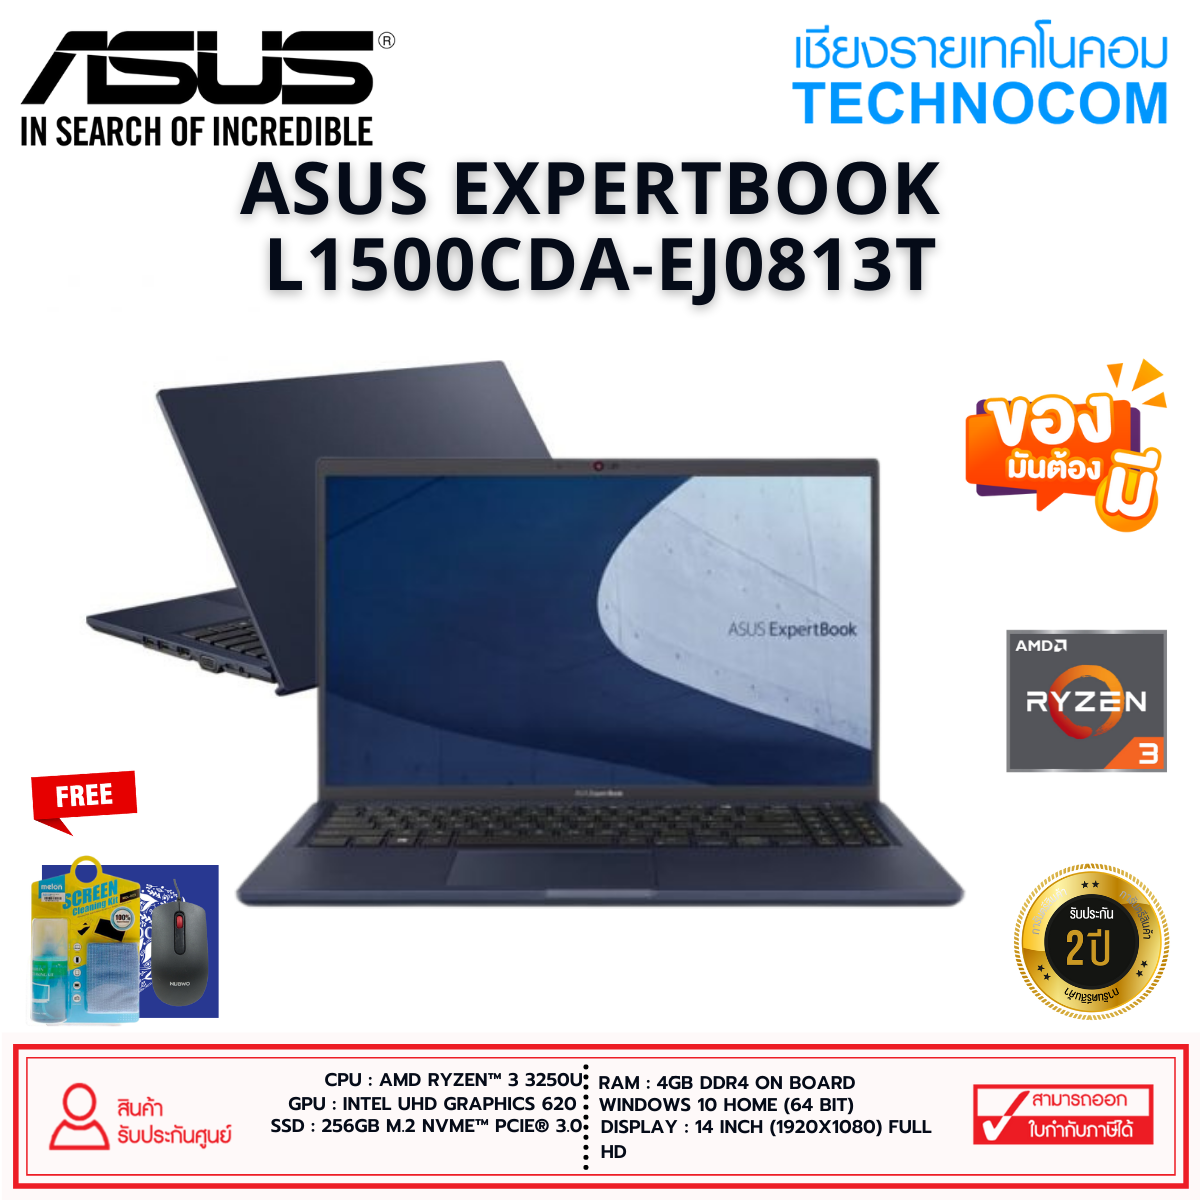 ASUS EXPERTBOOK L1500CDA-EJ0813T RYZEN 3 3250U/8GB/256GB SSD/15.6"/WIN10HOME